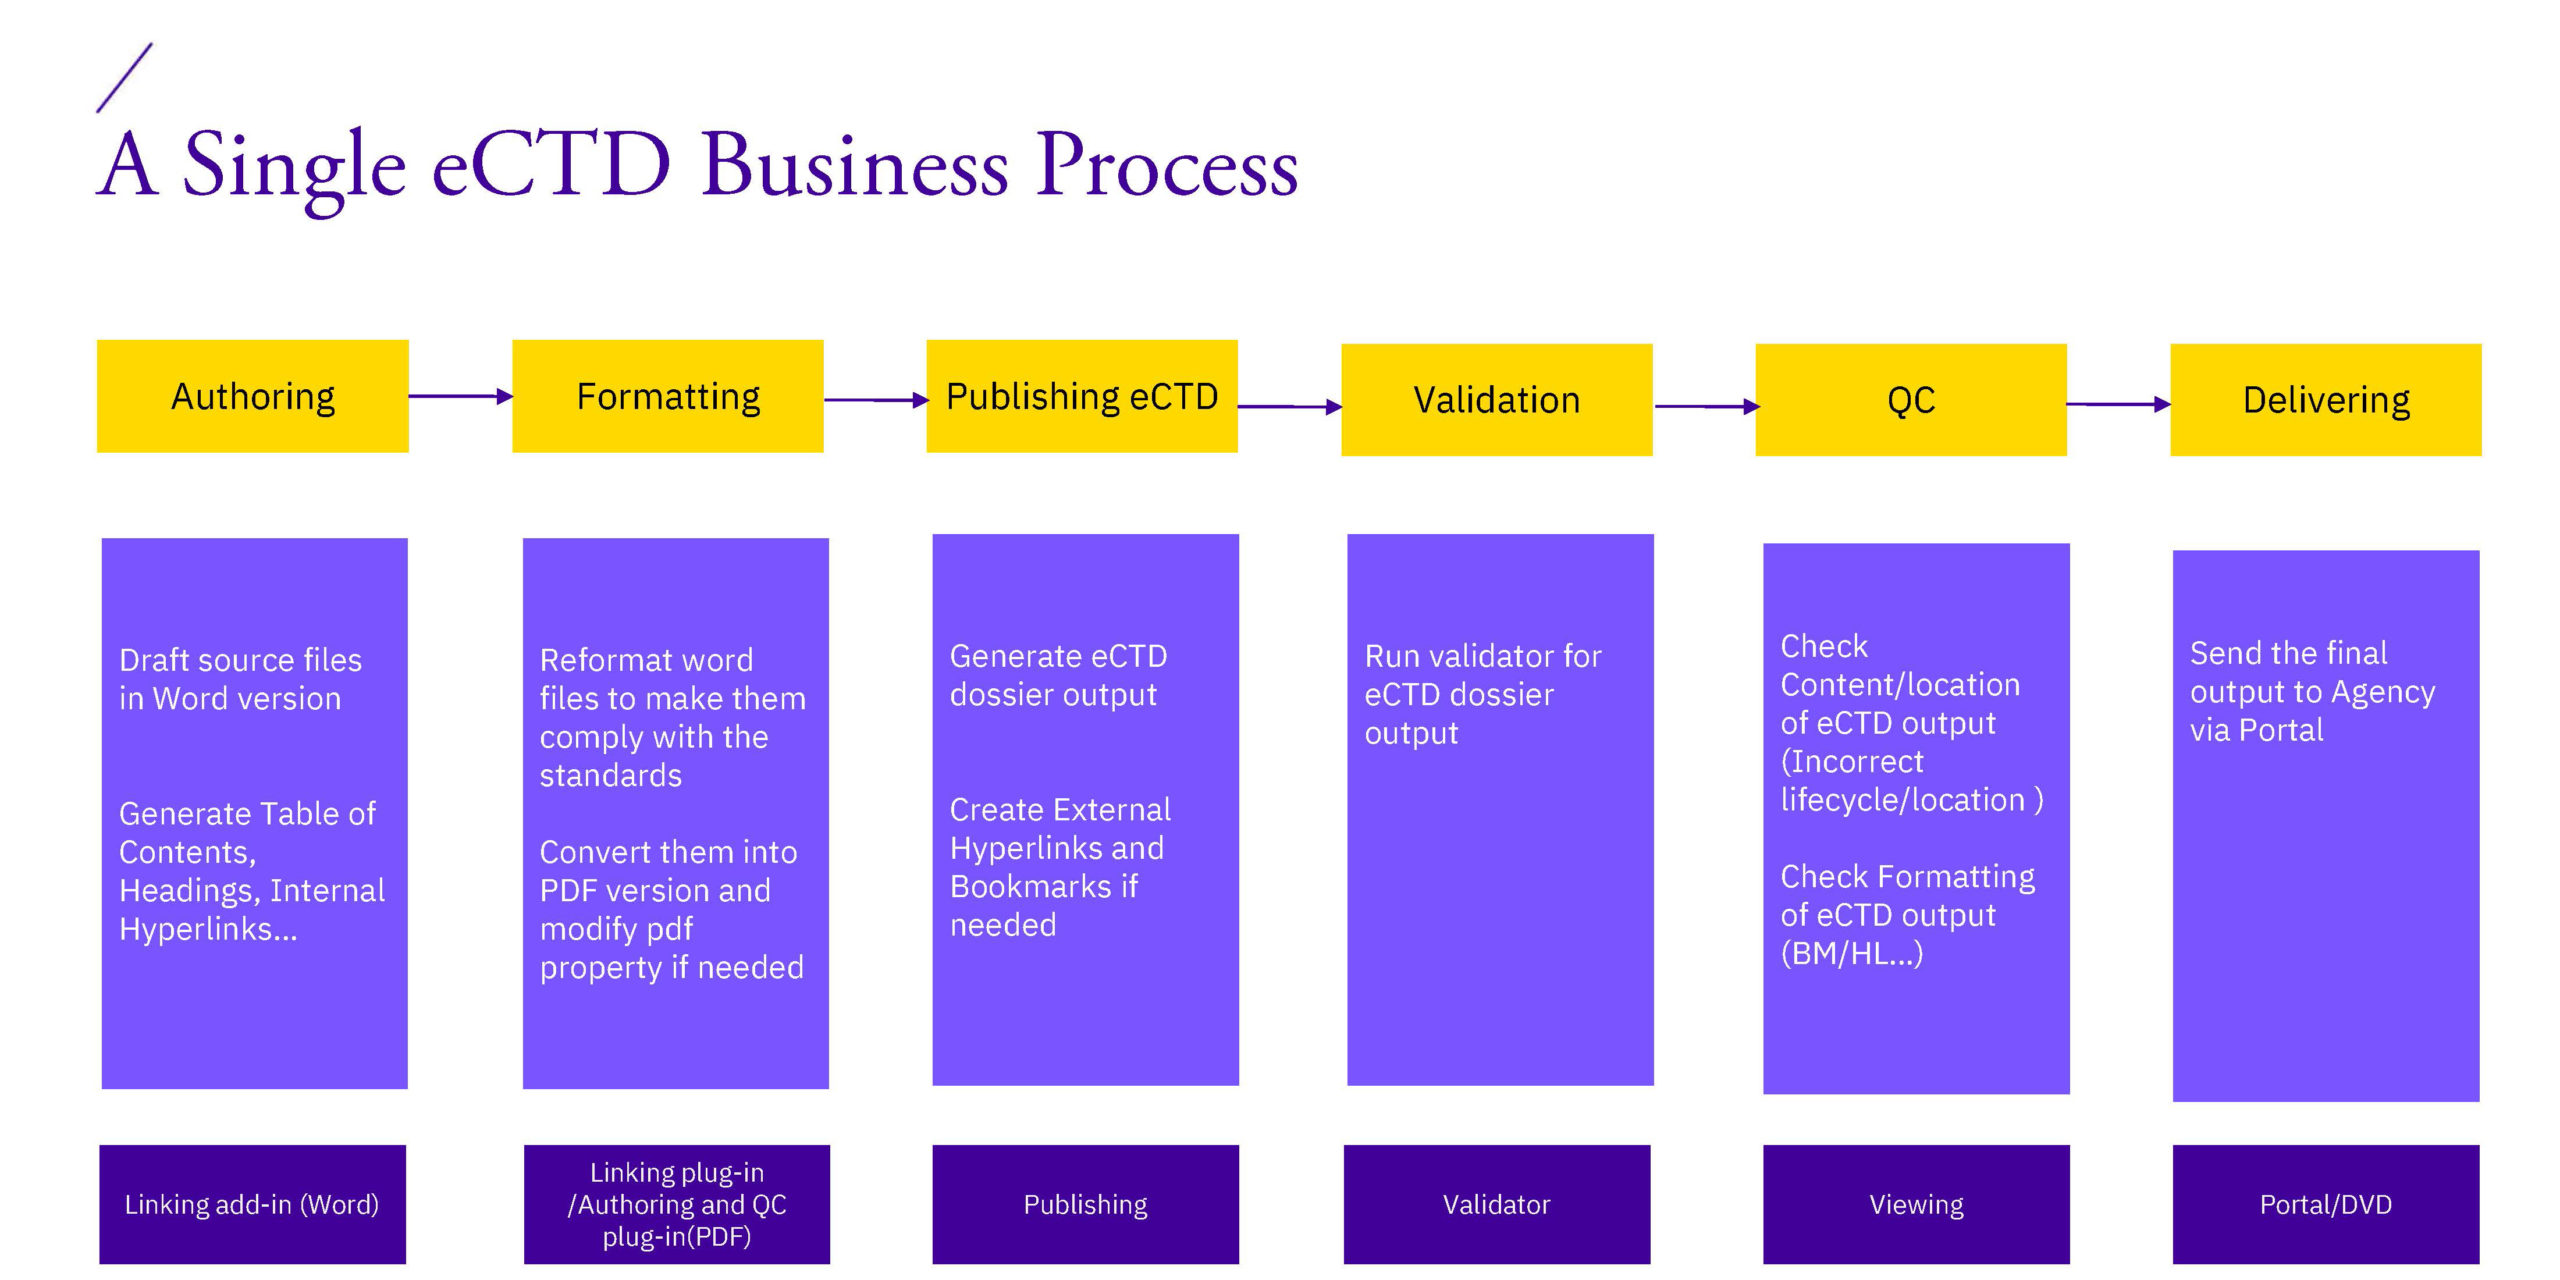 A Single eCTD Business Process